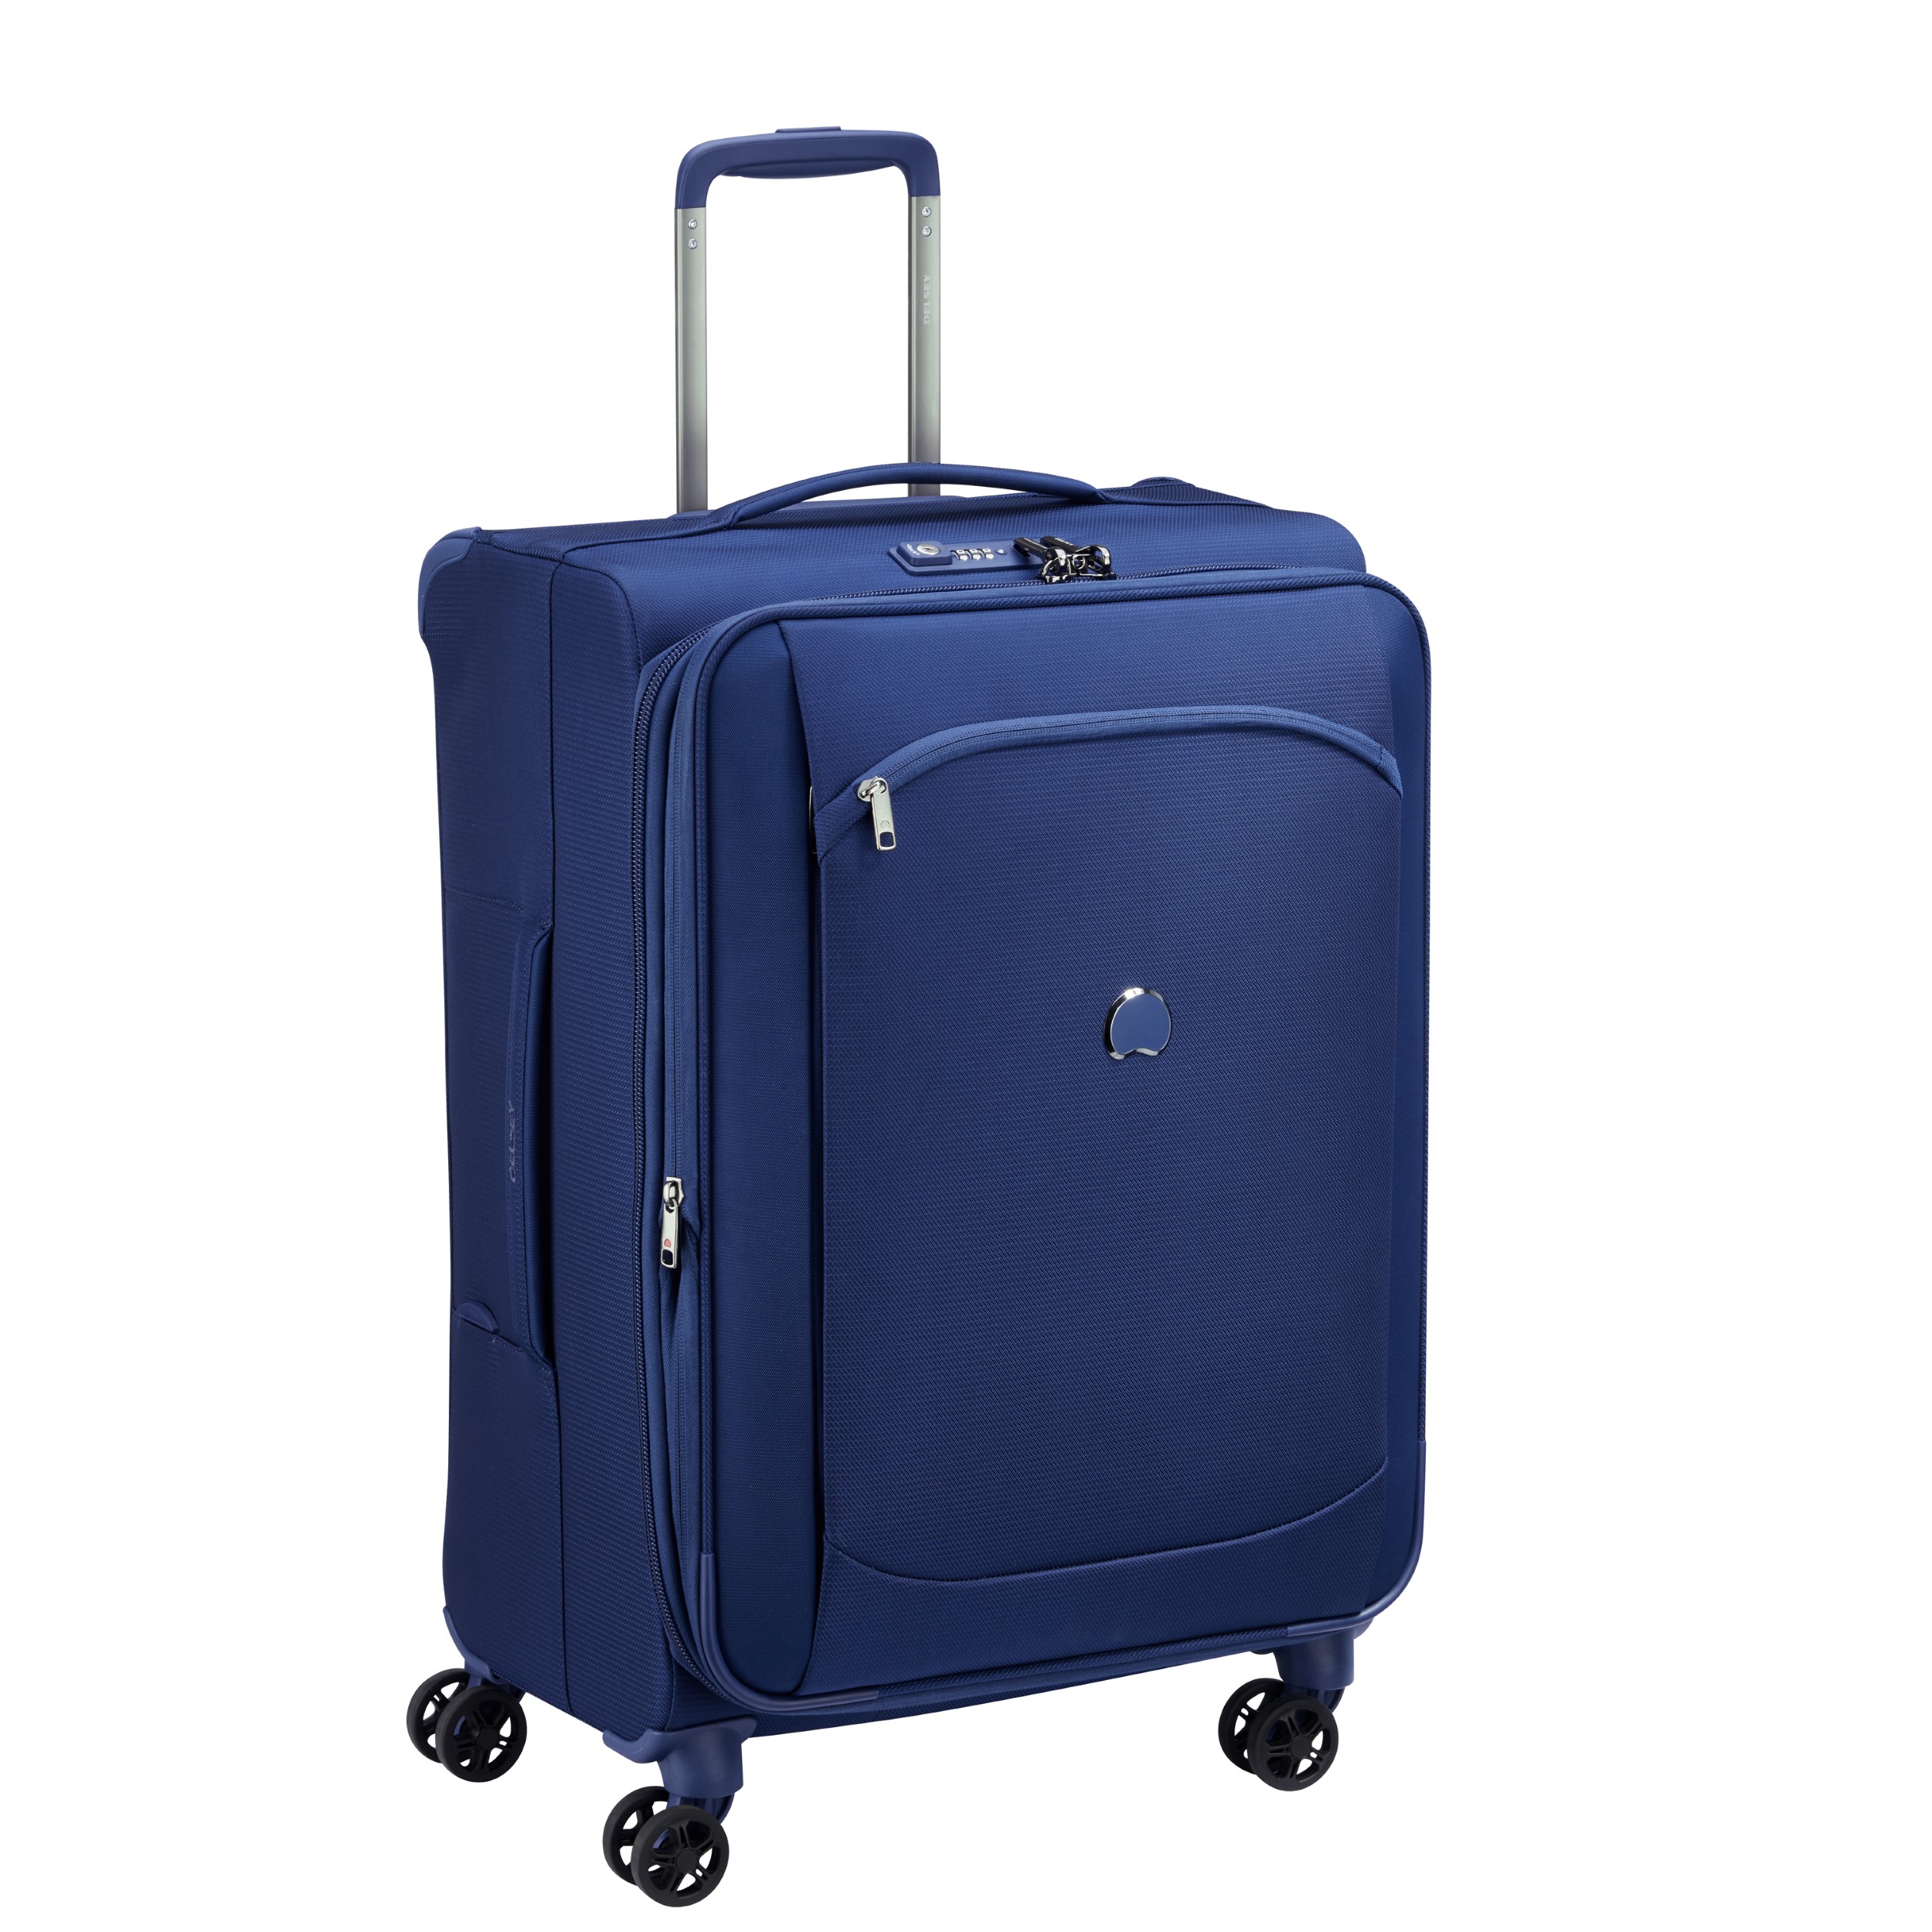 چمدان دلسی مدل MONTMARTRE AIR 2 کد 2352810 سایز متوسط